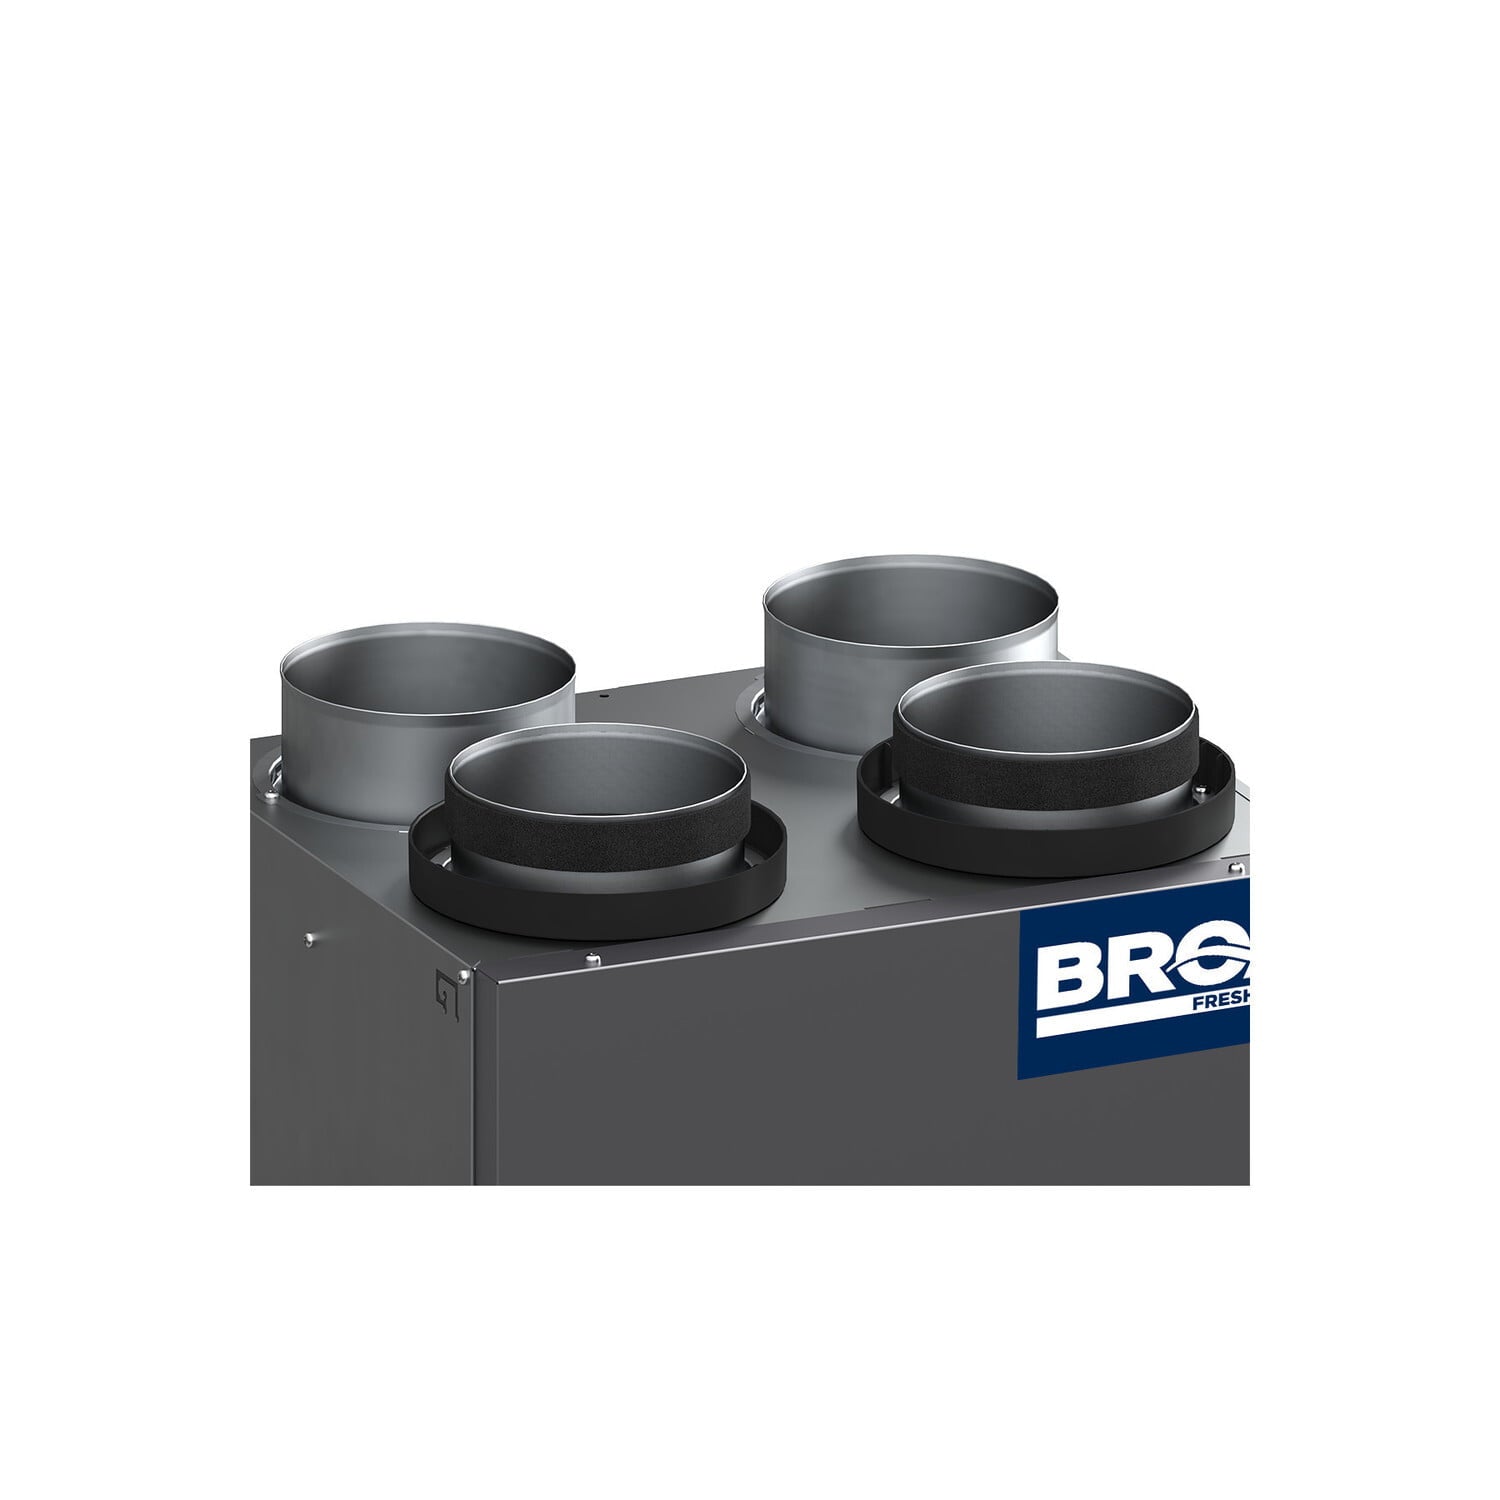 Broan B130E65RT Advanced Touchscreen Control